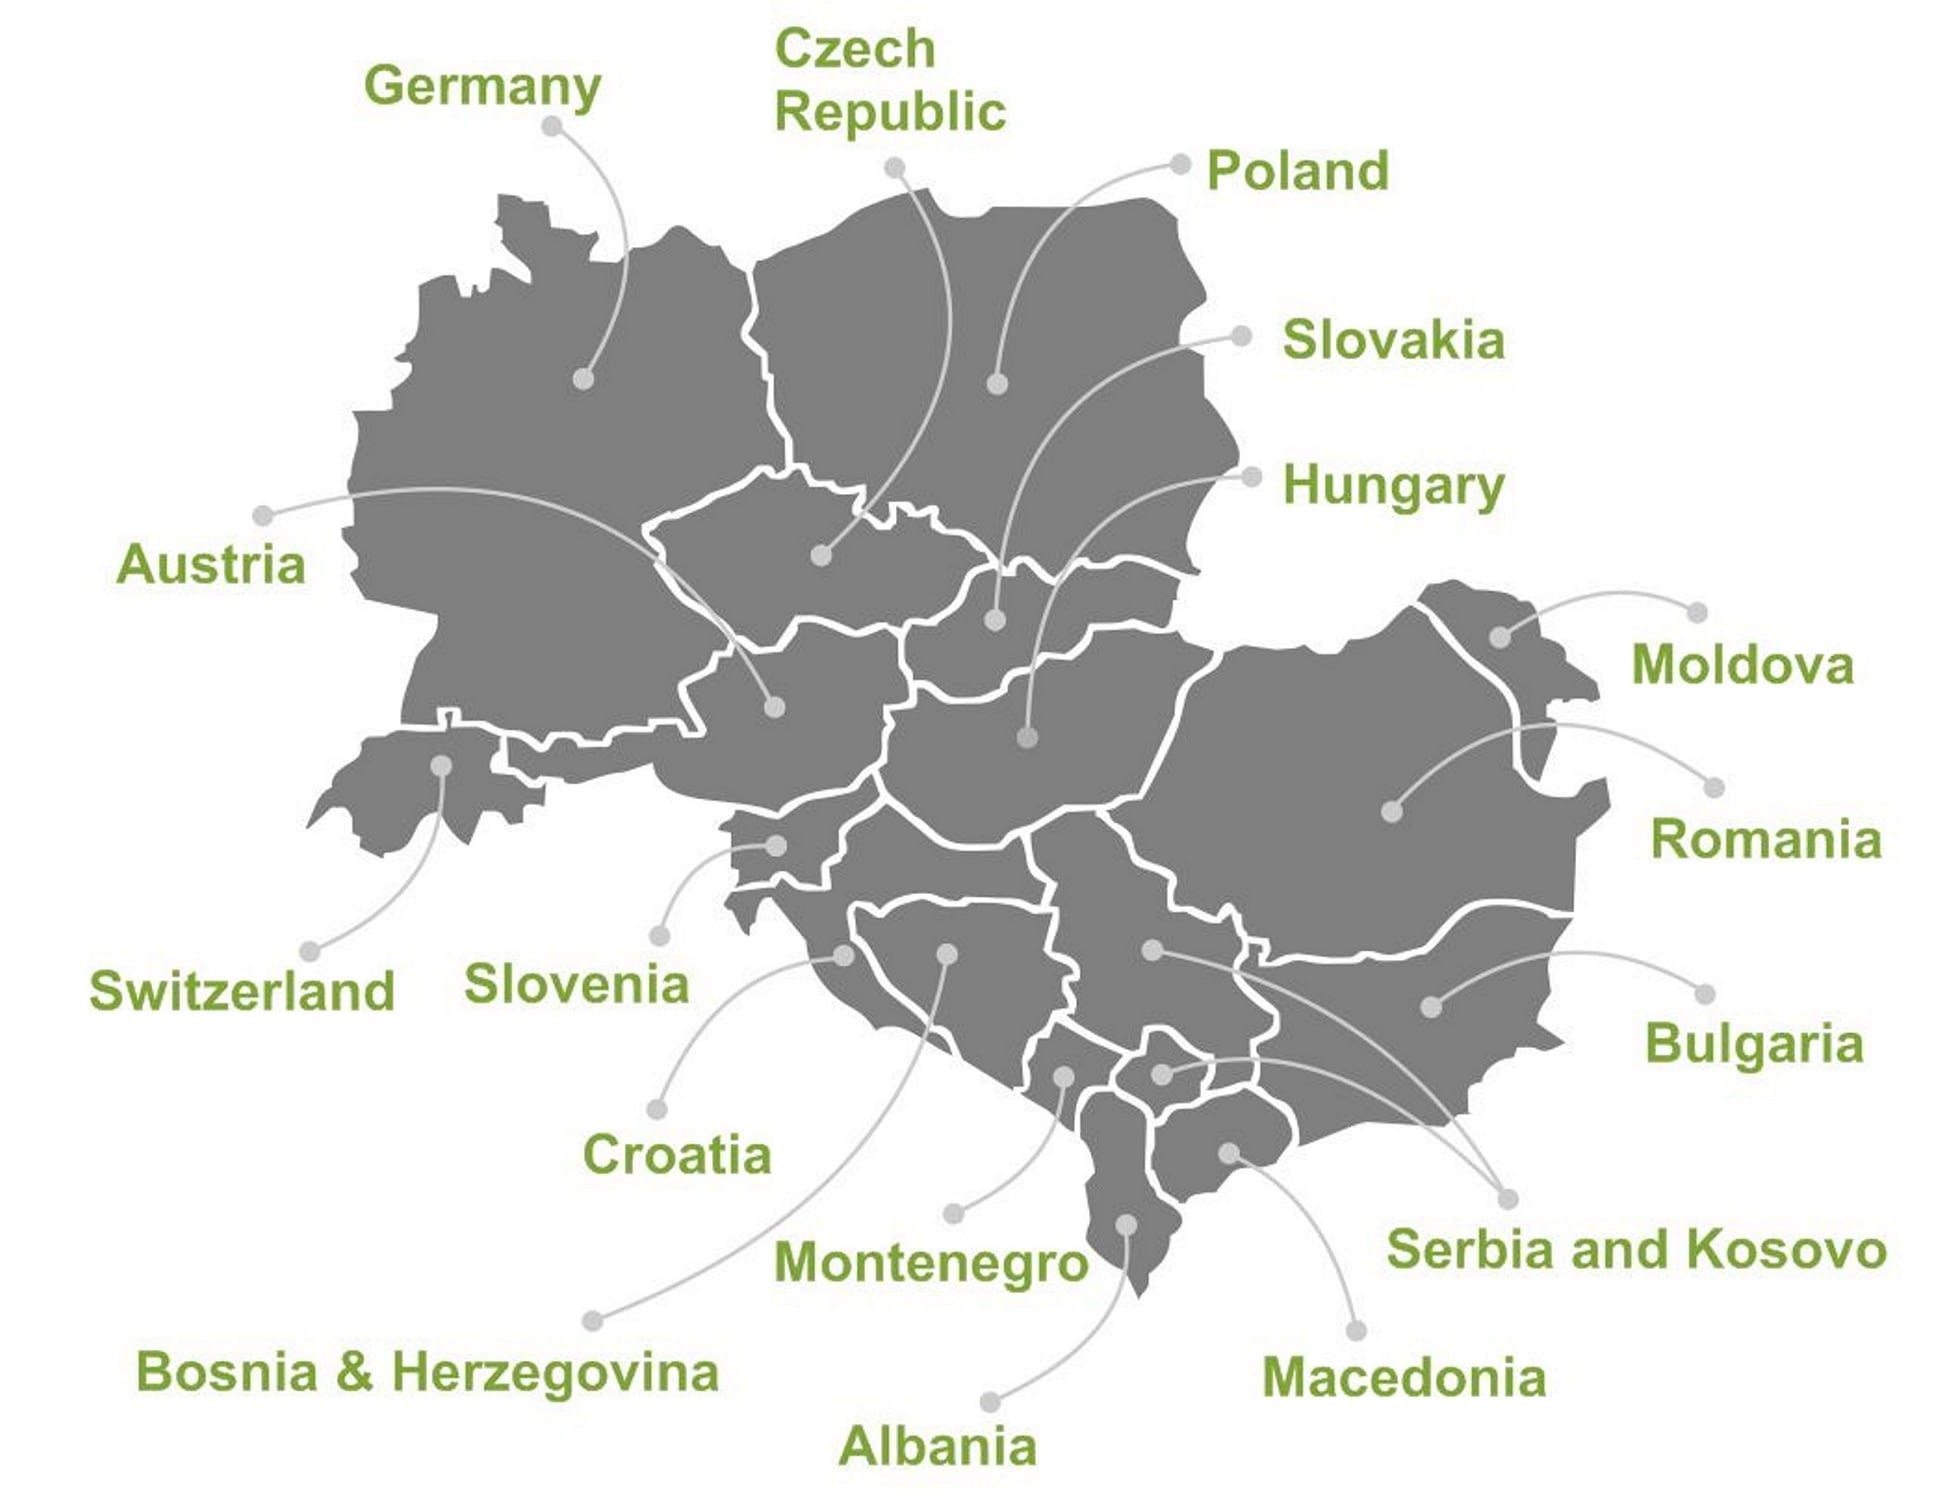 The grey map of the countries where CEE Assistance provides CEE Direct solution: Albania, Macedonia, Serbia and Kosovo, Bulgaria, Romania, Moldova, Hungary, Slovakia, Poland, Czech Republic, Germany, Austria, Switzerland, Slovenia, Croatia, Bosnia & Herzegovina, Montenegro.